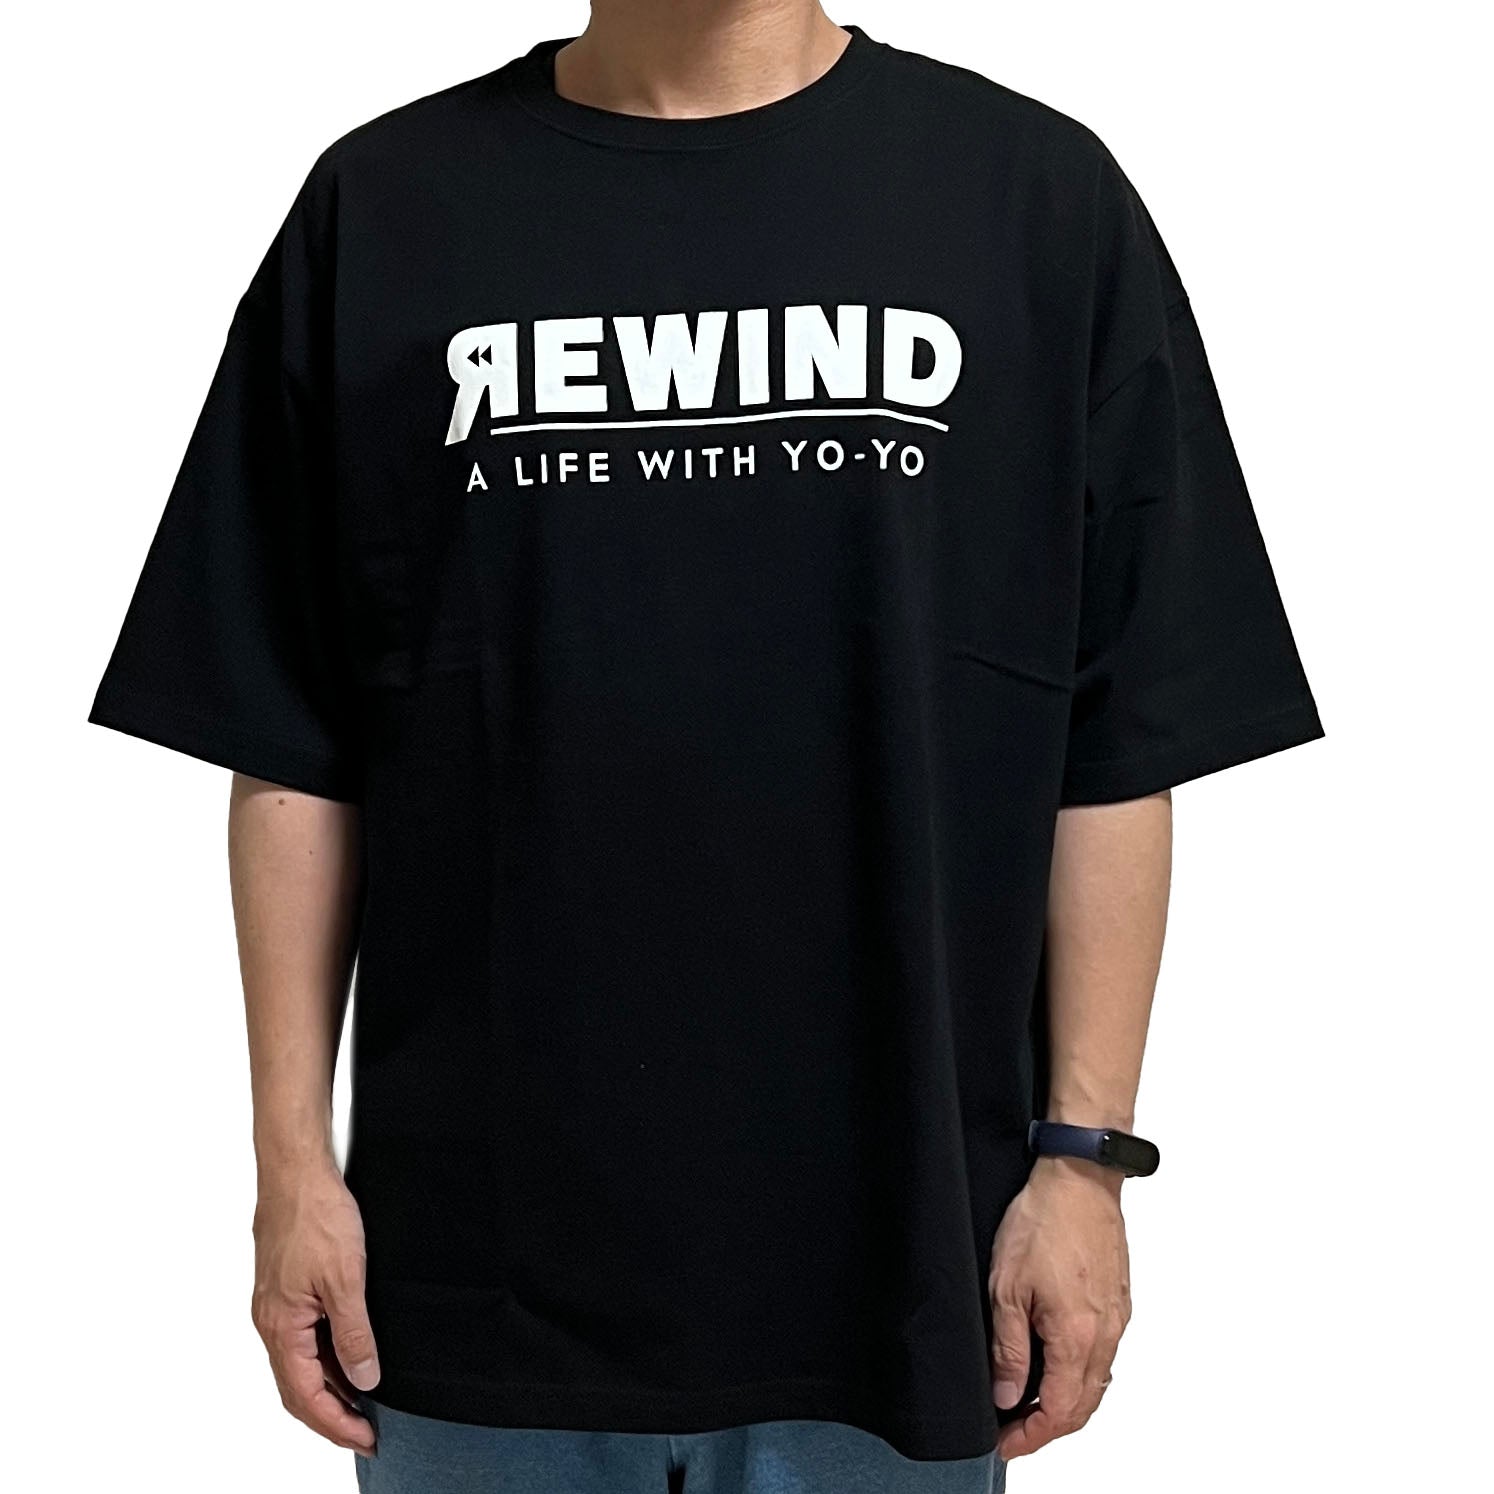 REWIND Loose Fitting Silhouette T-shirt (Black / White Logo)